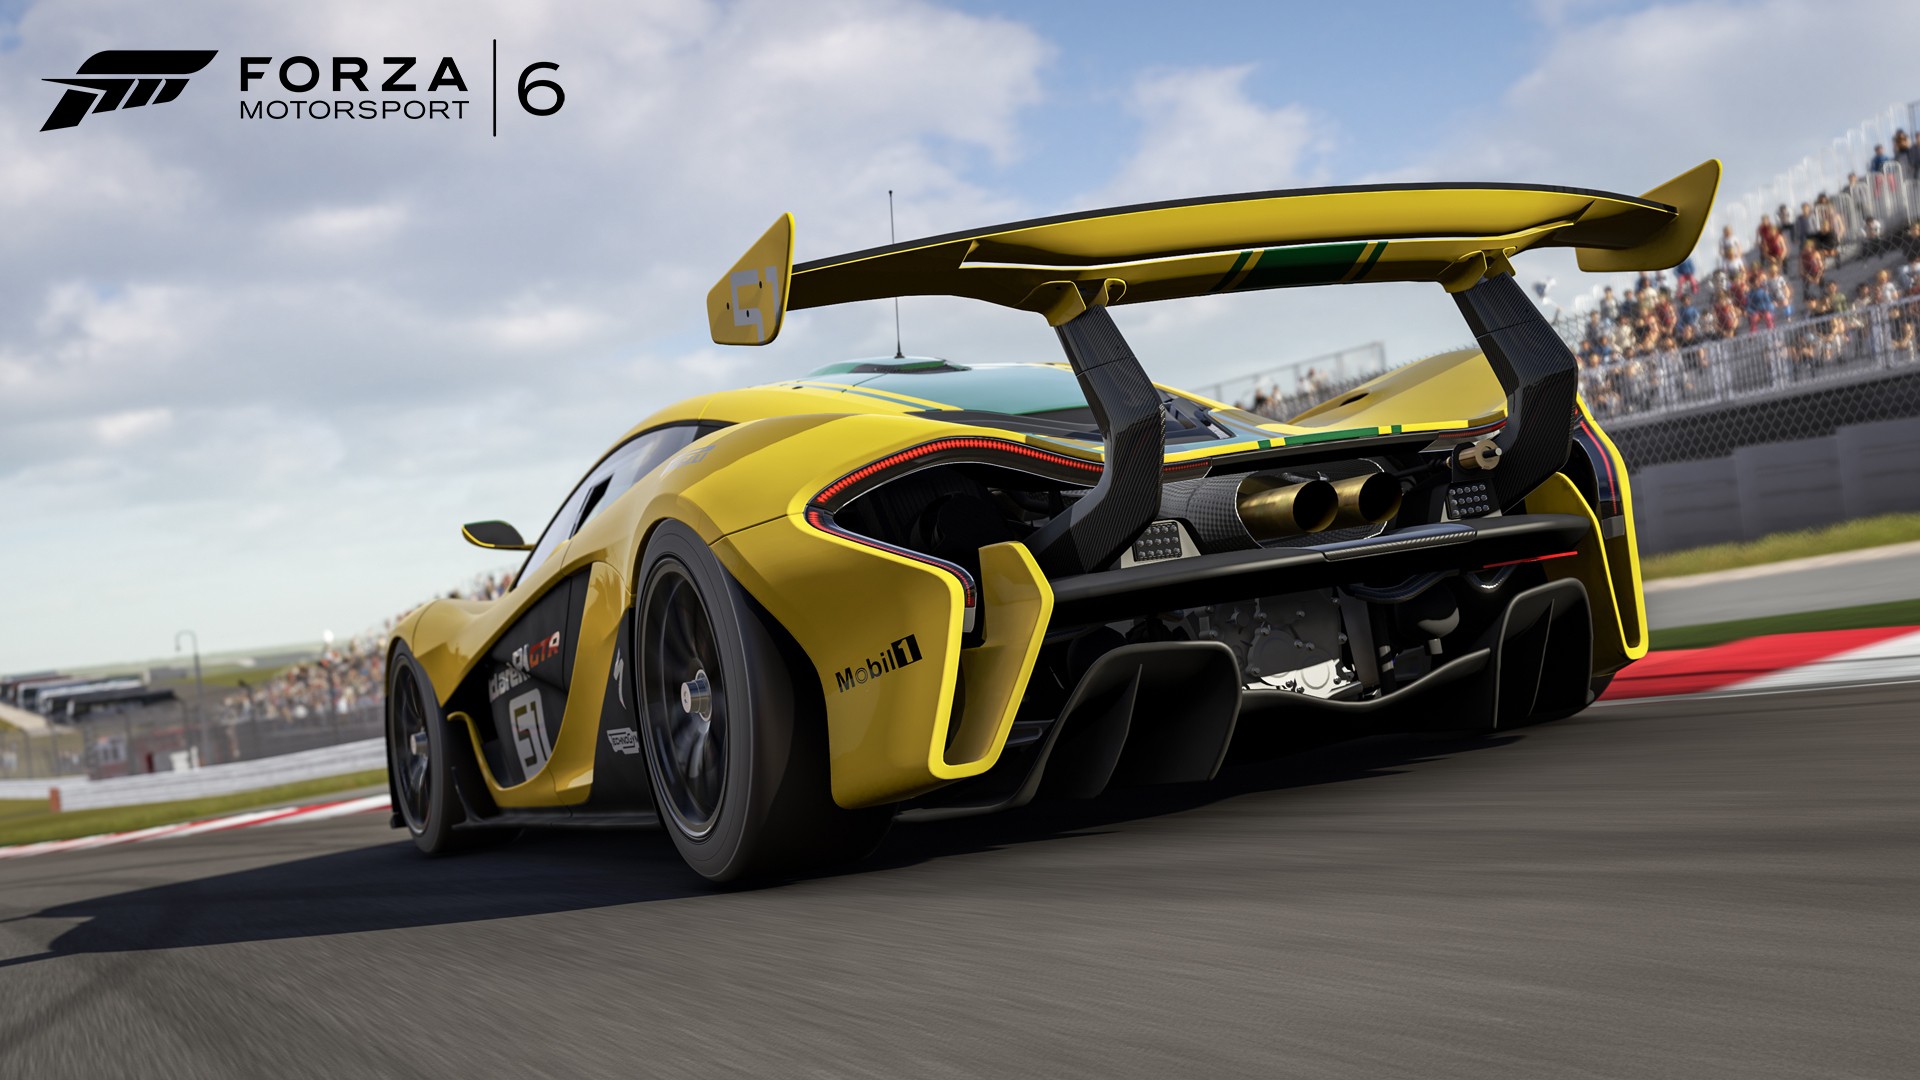 General 1920x1080 Forza Motorsport 6 car McLaren P1 racing video games Turn 10 Studios yellow cars race cars supercars vehicle